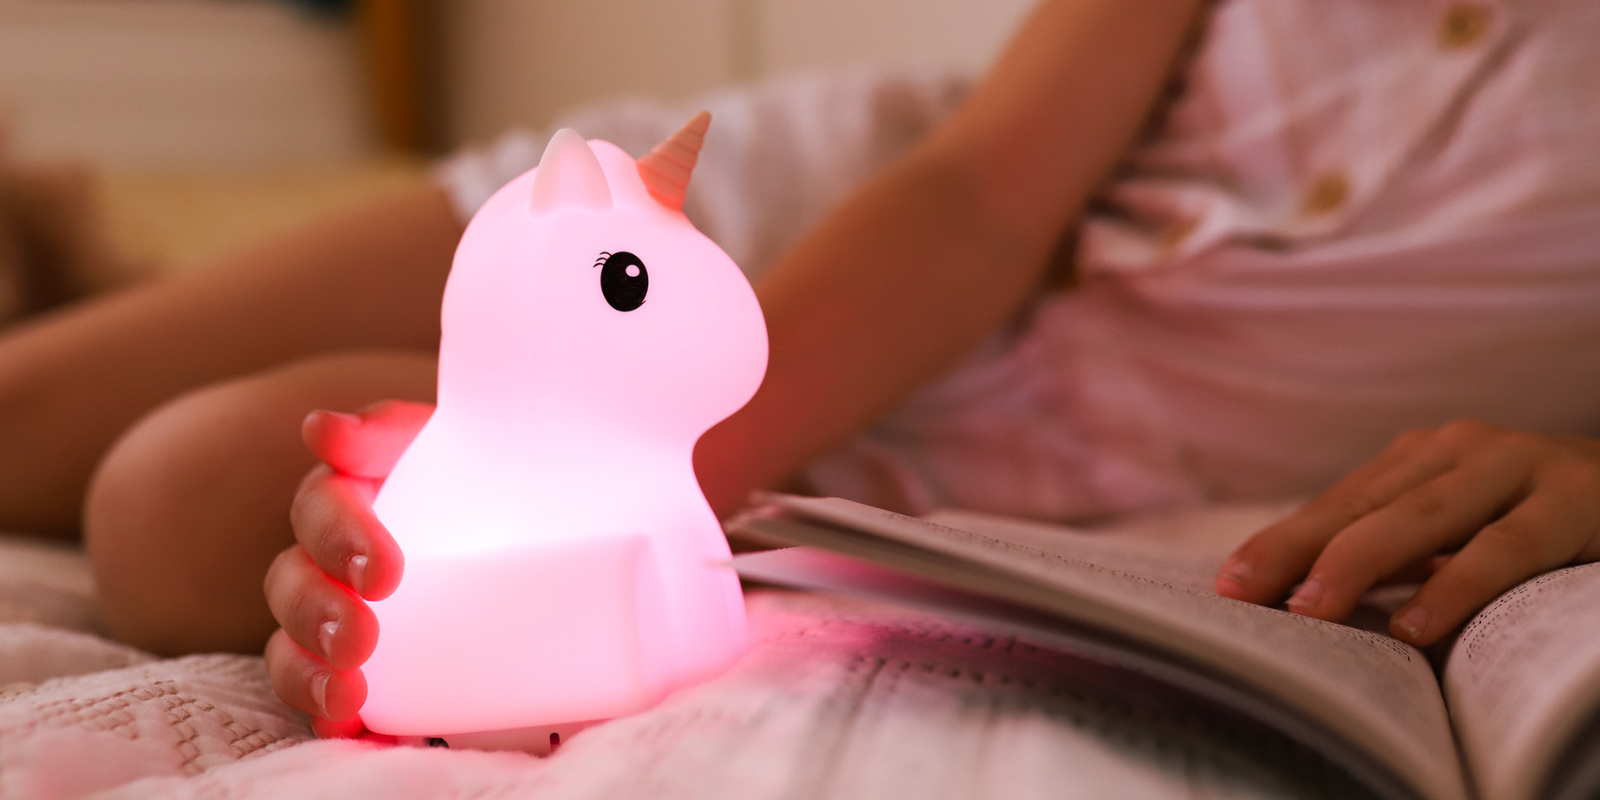 Kids Night Lamp - Unicorn